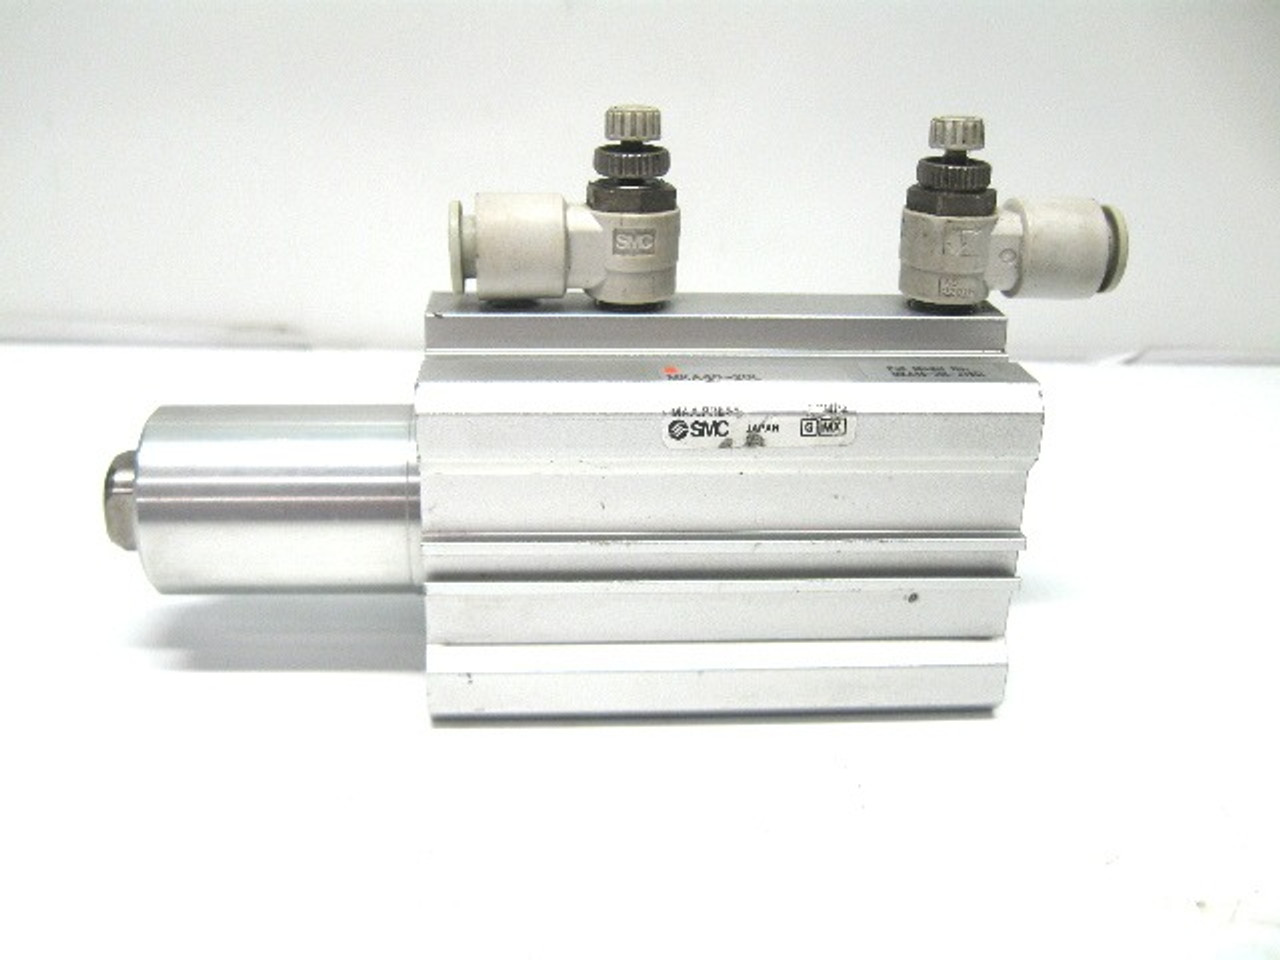 Smc MKA40-20L Rotary Clamp Cylinder 40 MM Bore, 20 MM Stroke, MKA40-20L-J79CL